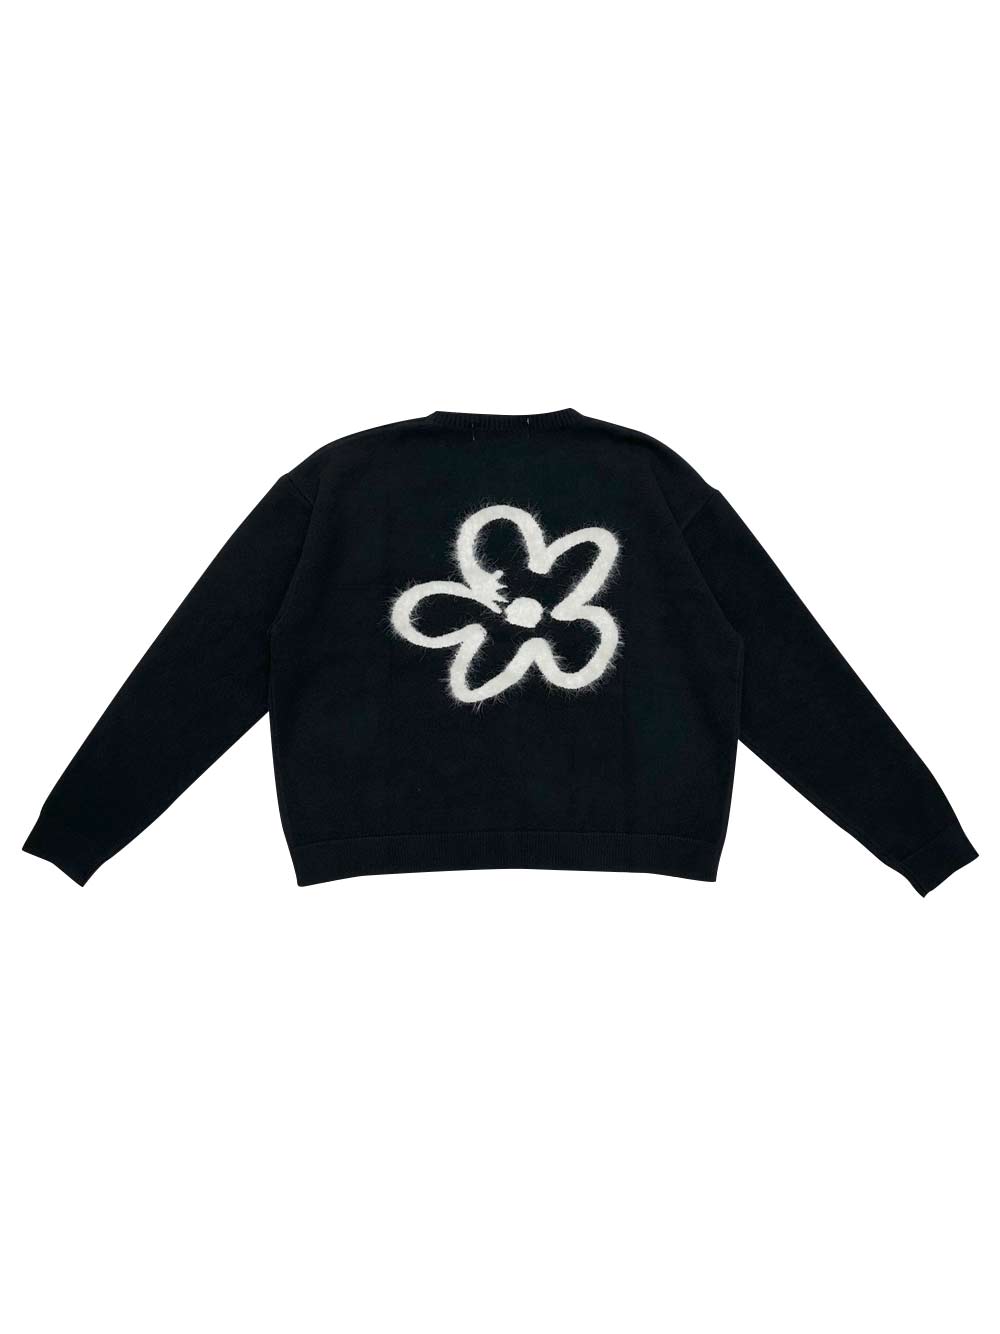 Flower Black Sweater